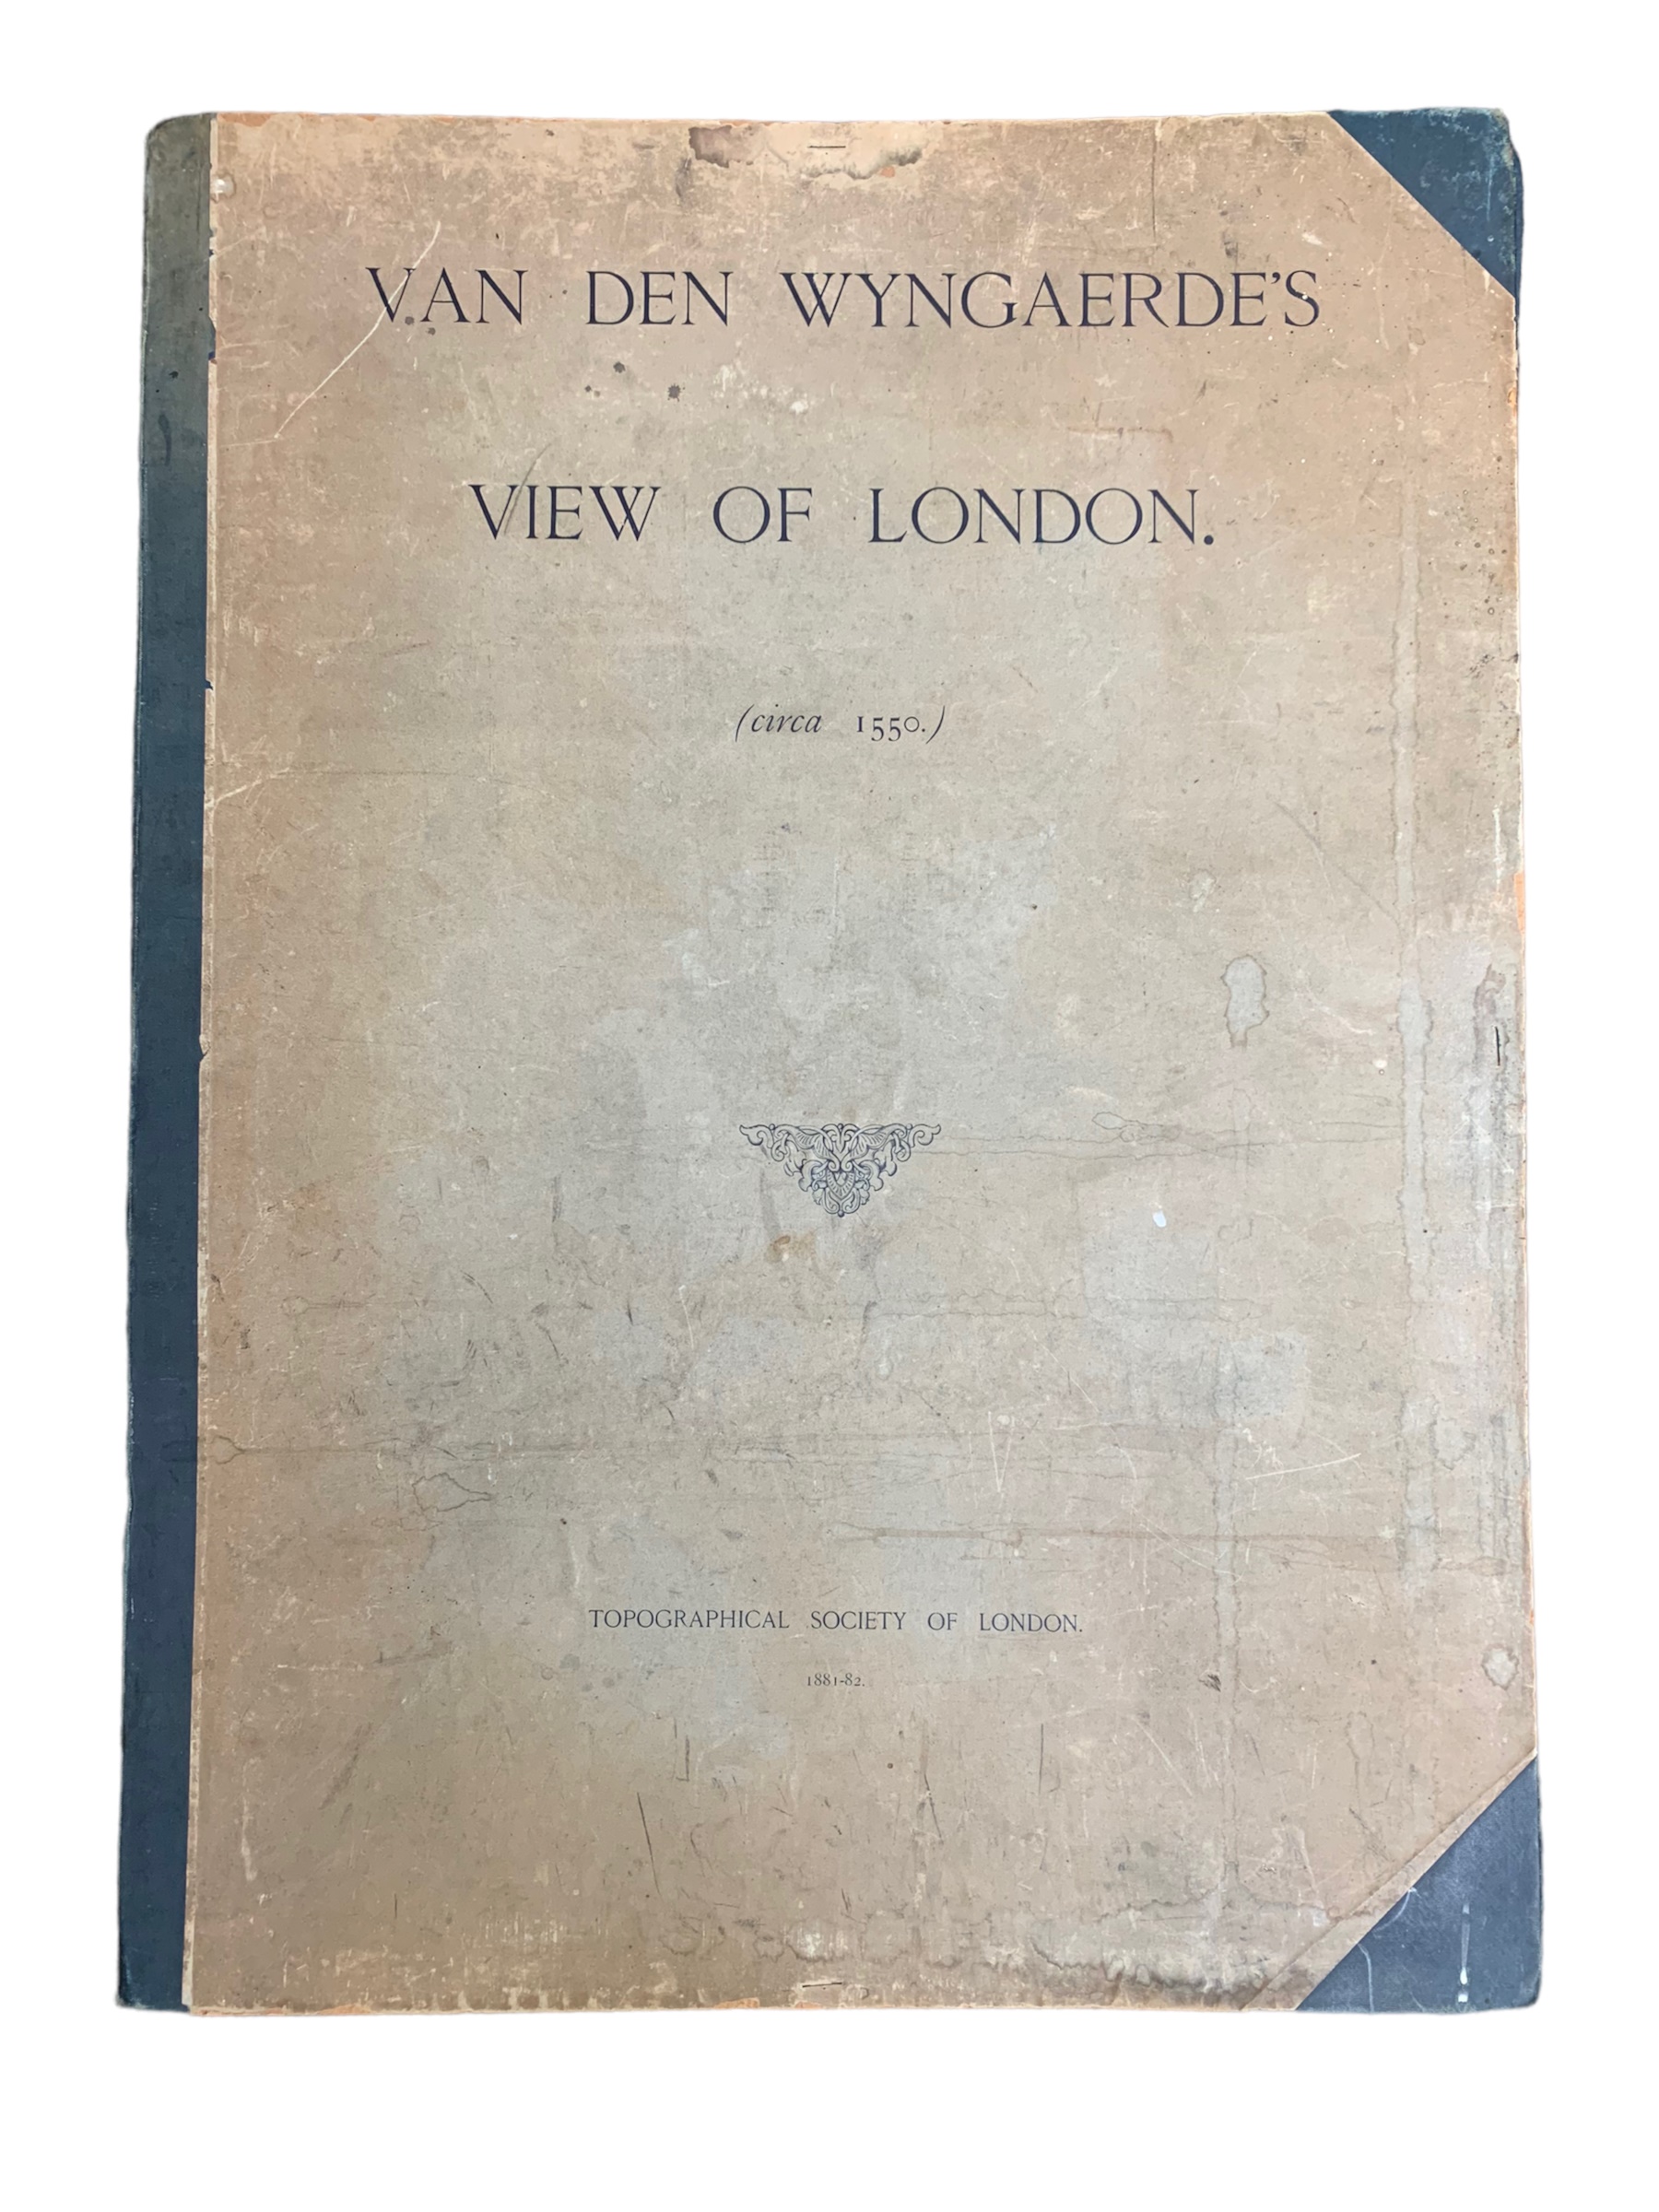 van den Wyngaerde (Anton) after, View of London (circa 1550), Typographic Etching Company, 1881-2